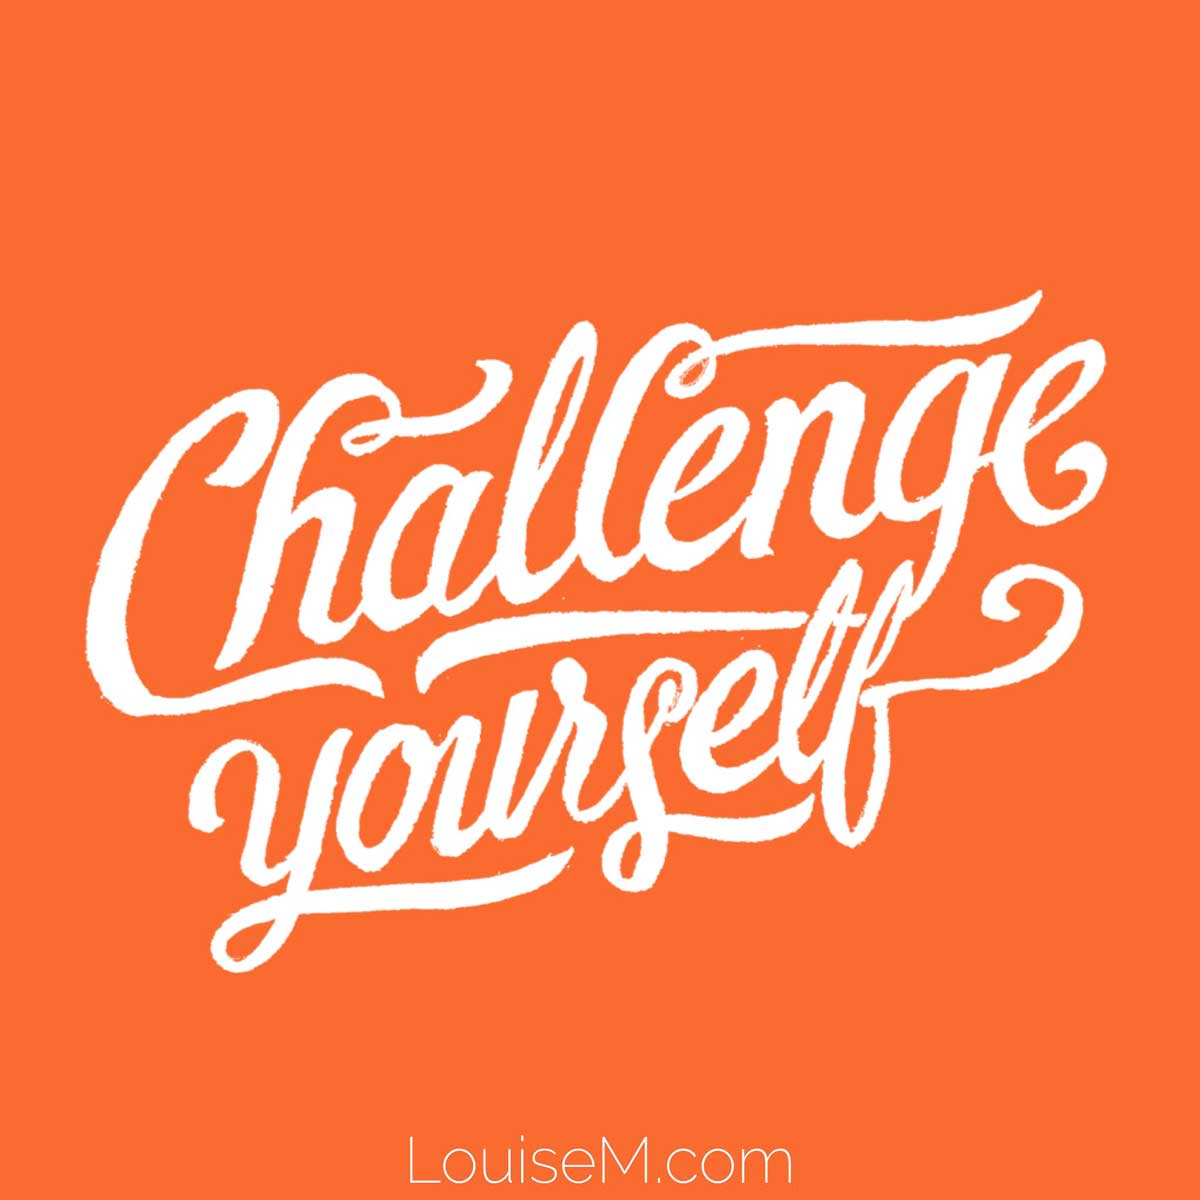 orange quote graphic says challenge yourself.